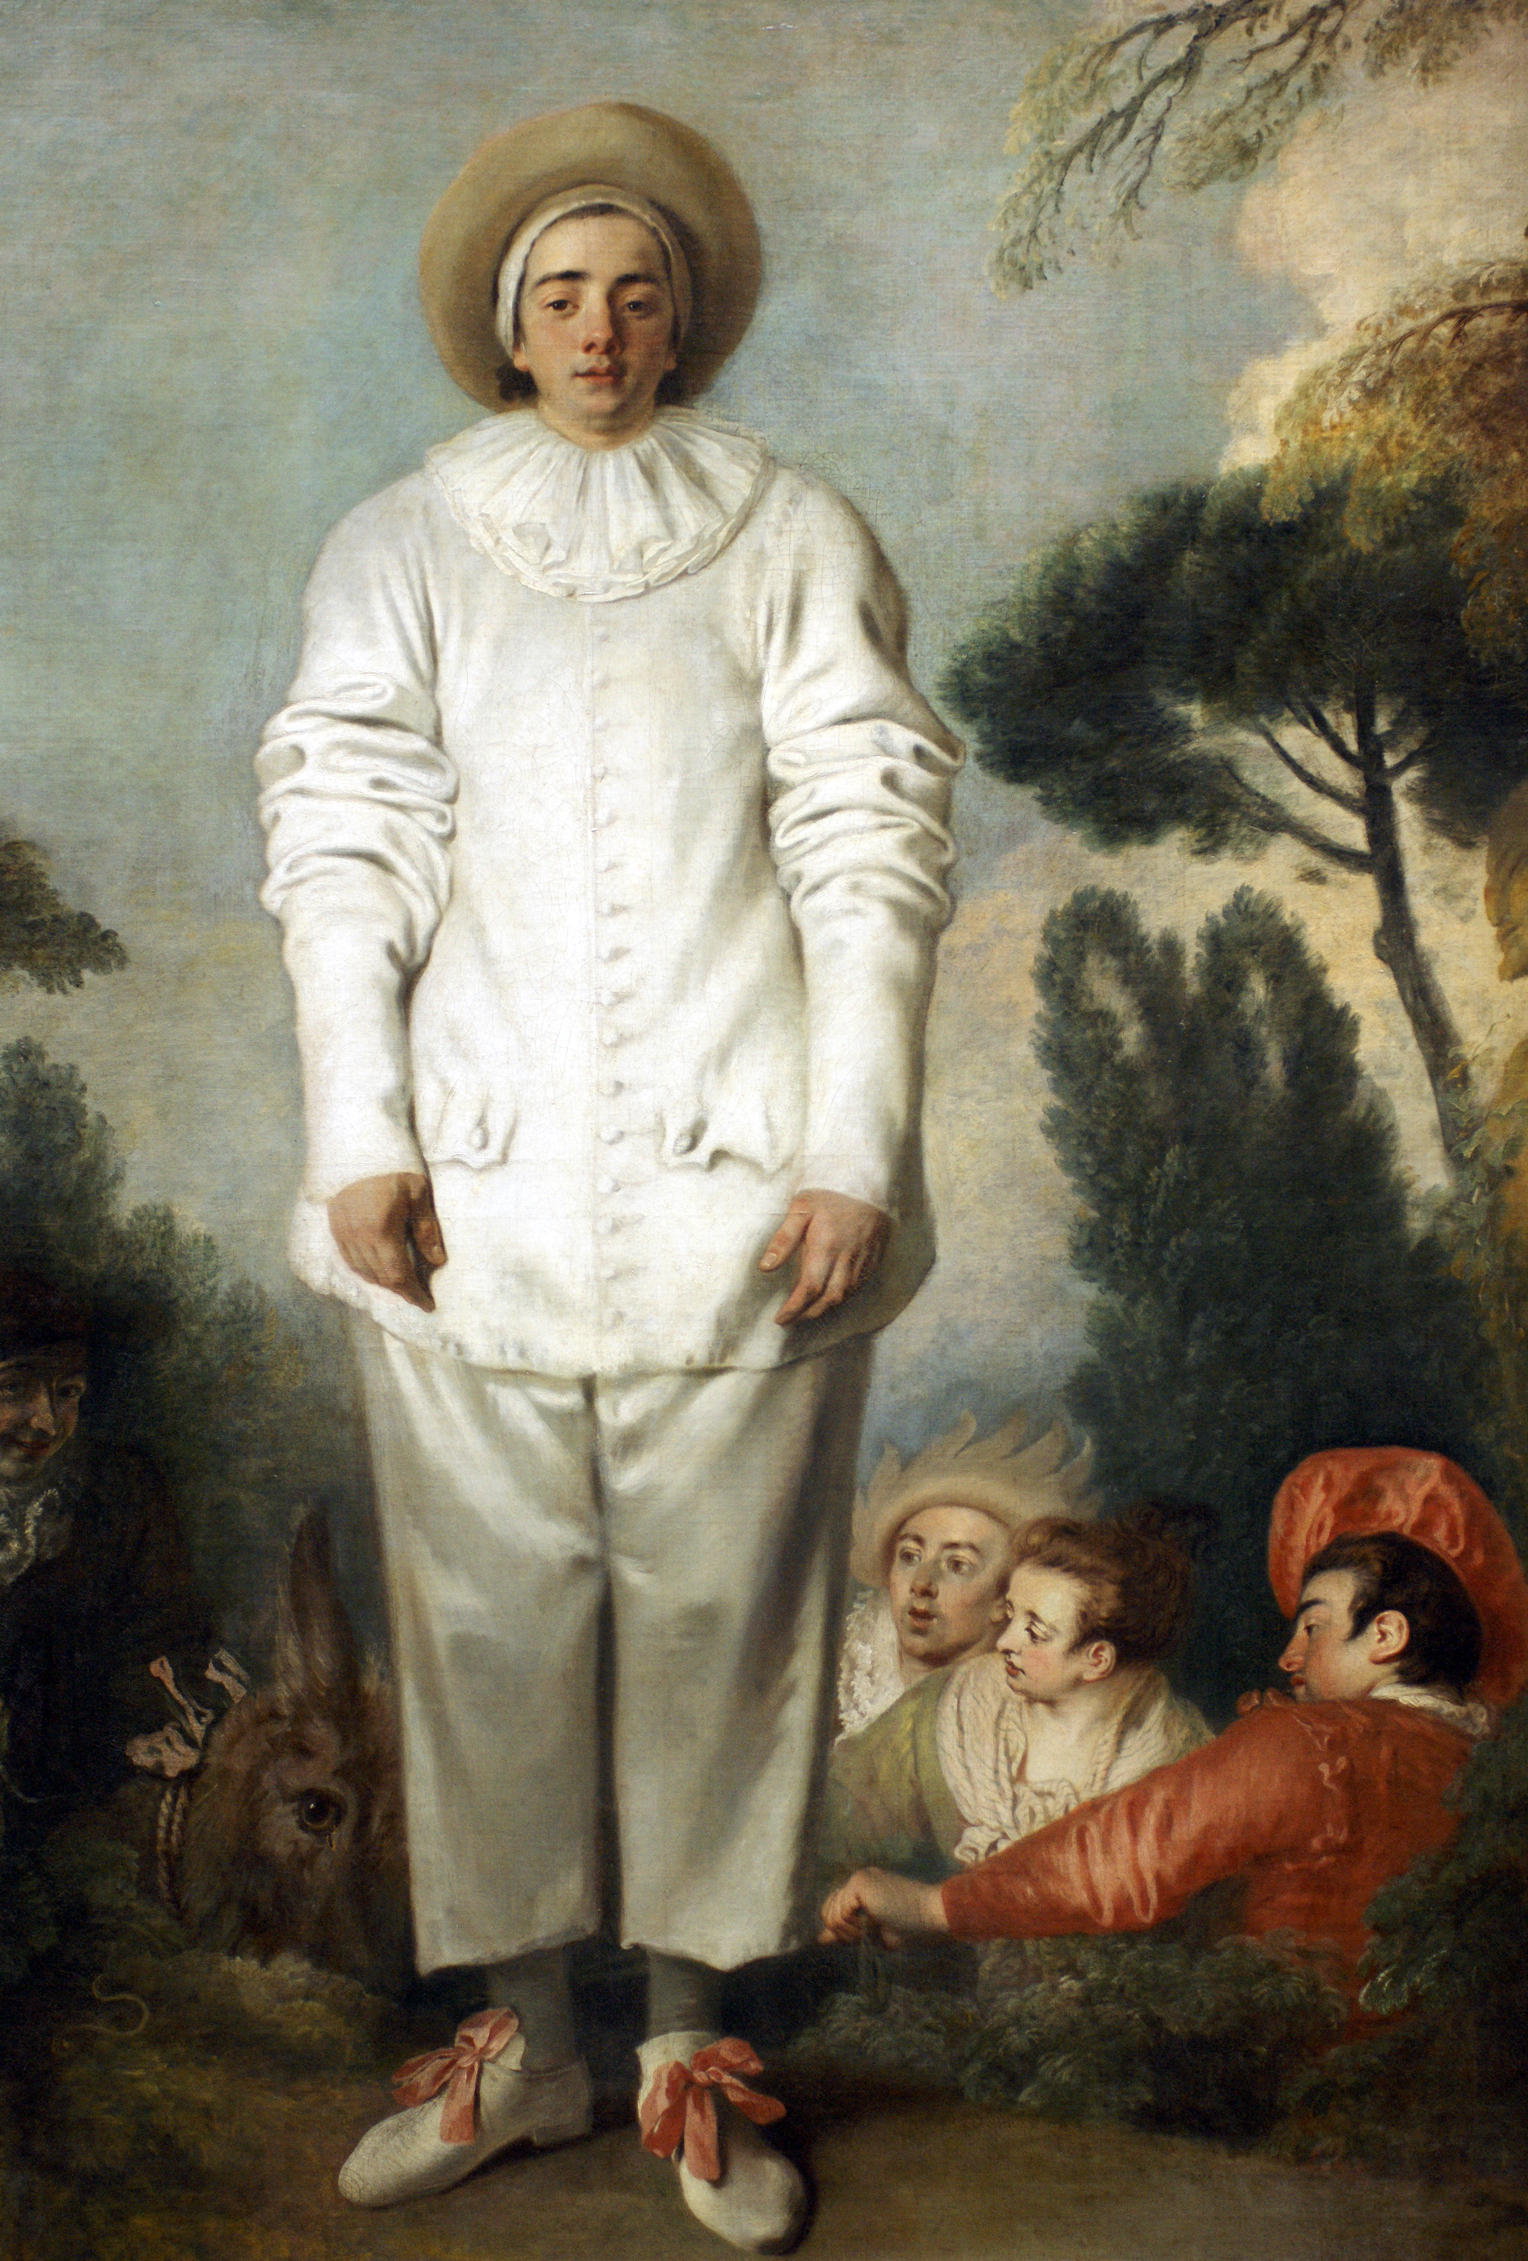 Pierrot formerly known as Gilles by Antoine Watteau - c. 1719 - 184.5 × 149.5 cm Musée du Louvre